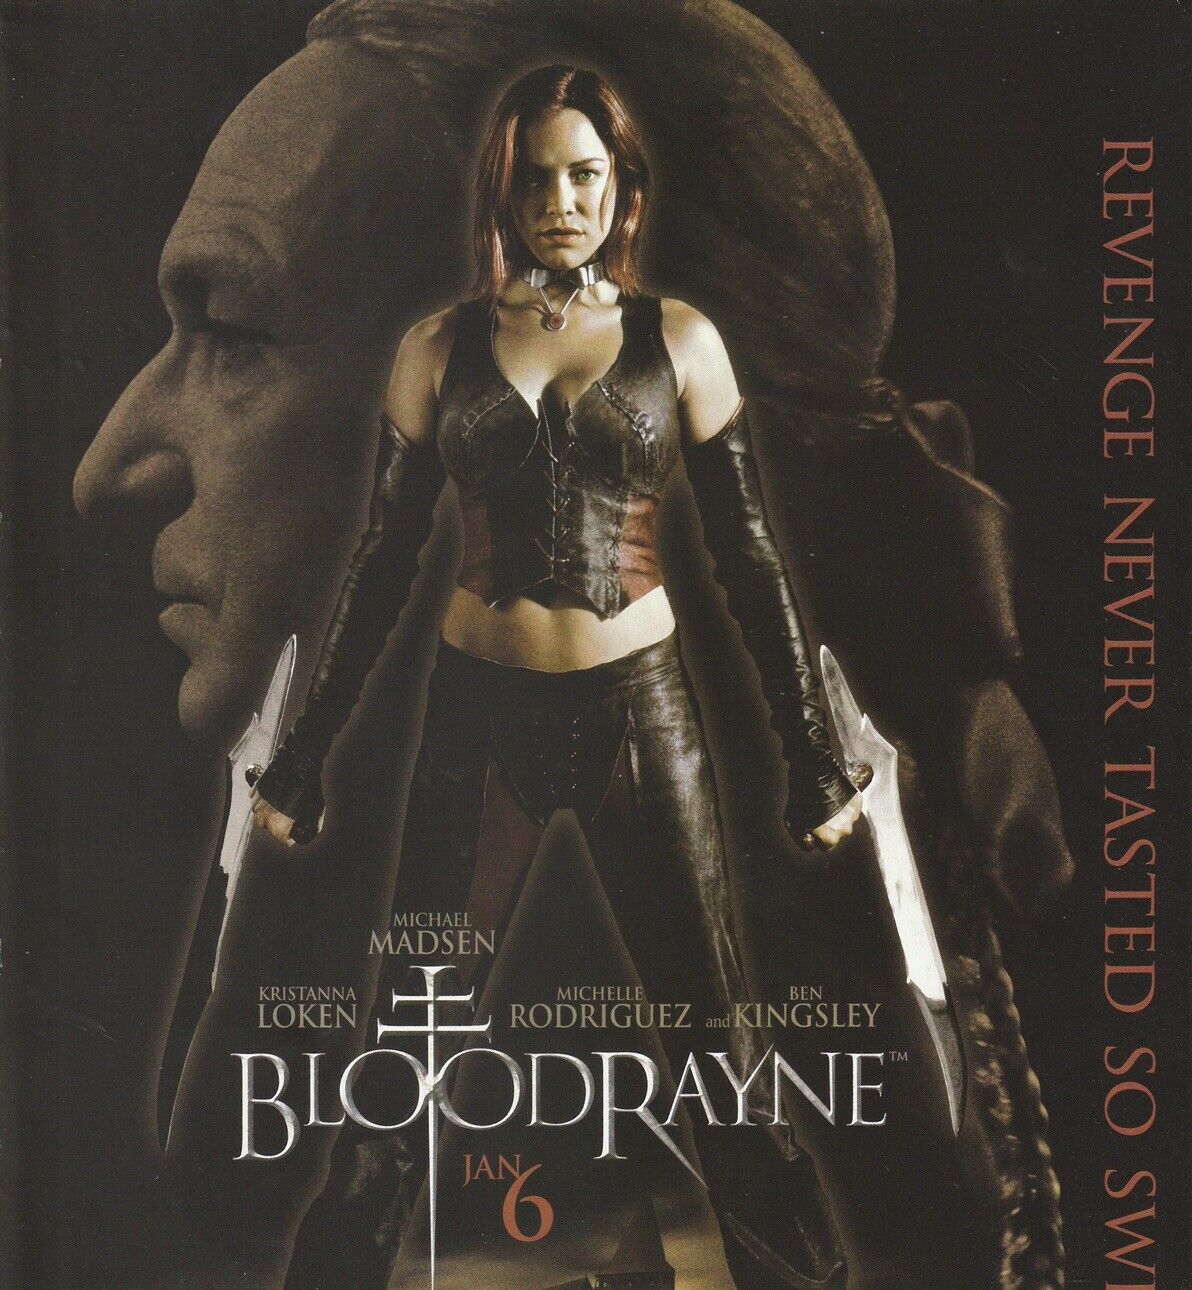 Vintage 2006 BloodRayne Movie Debut Print Ad/Poster Art Original 21x27cm EGM 199